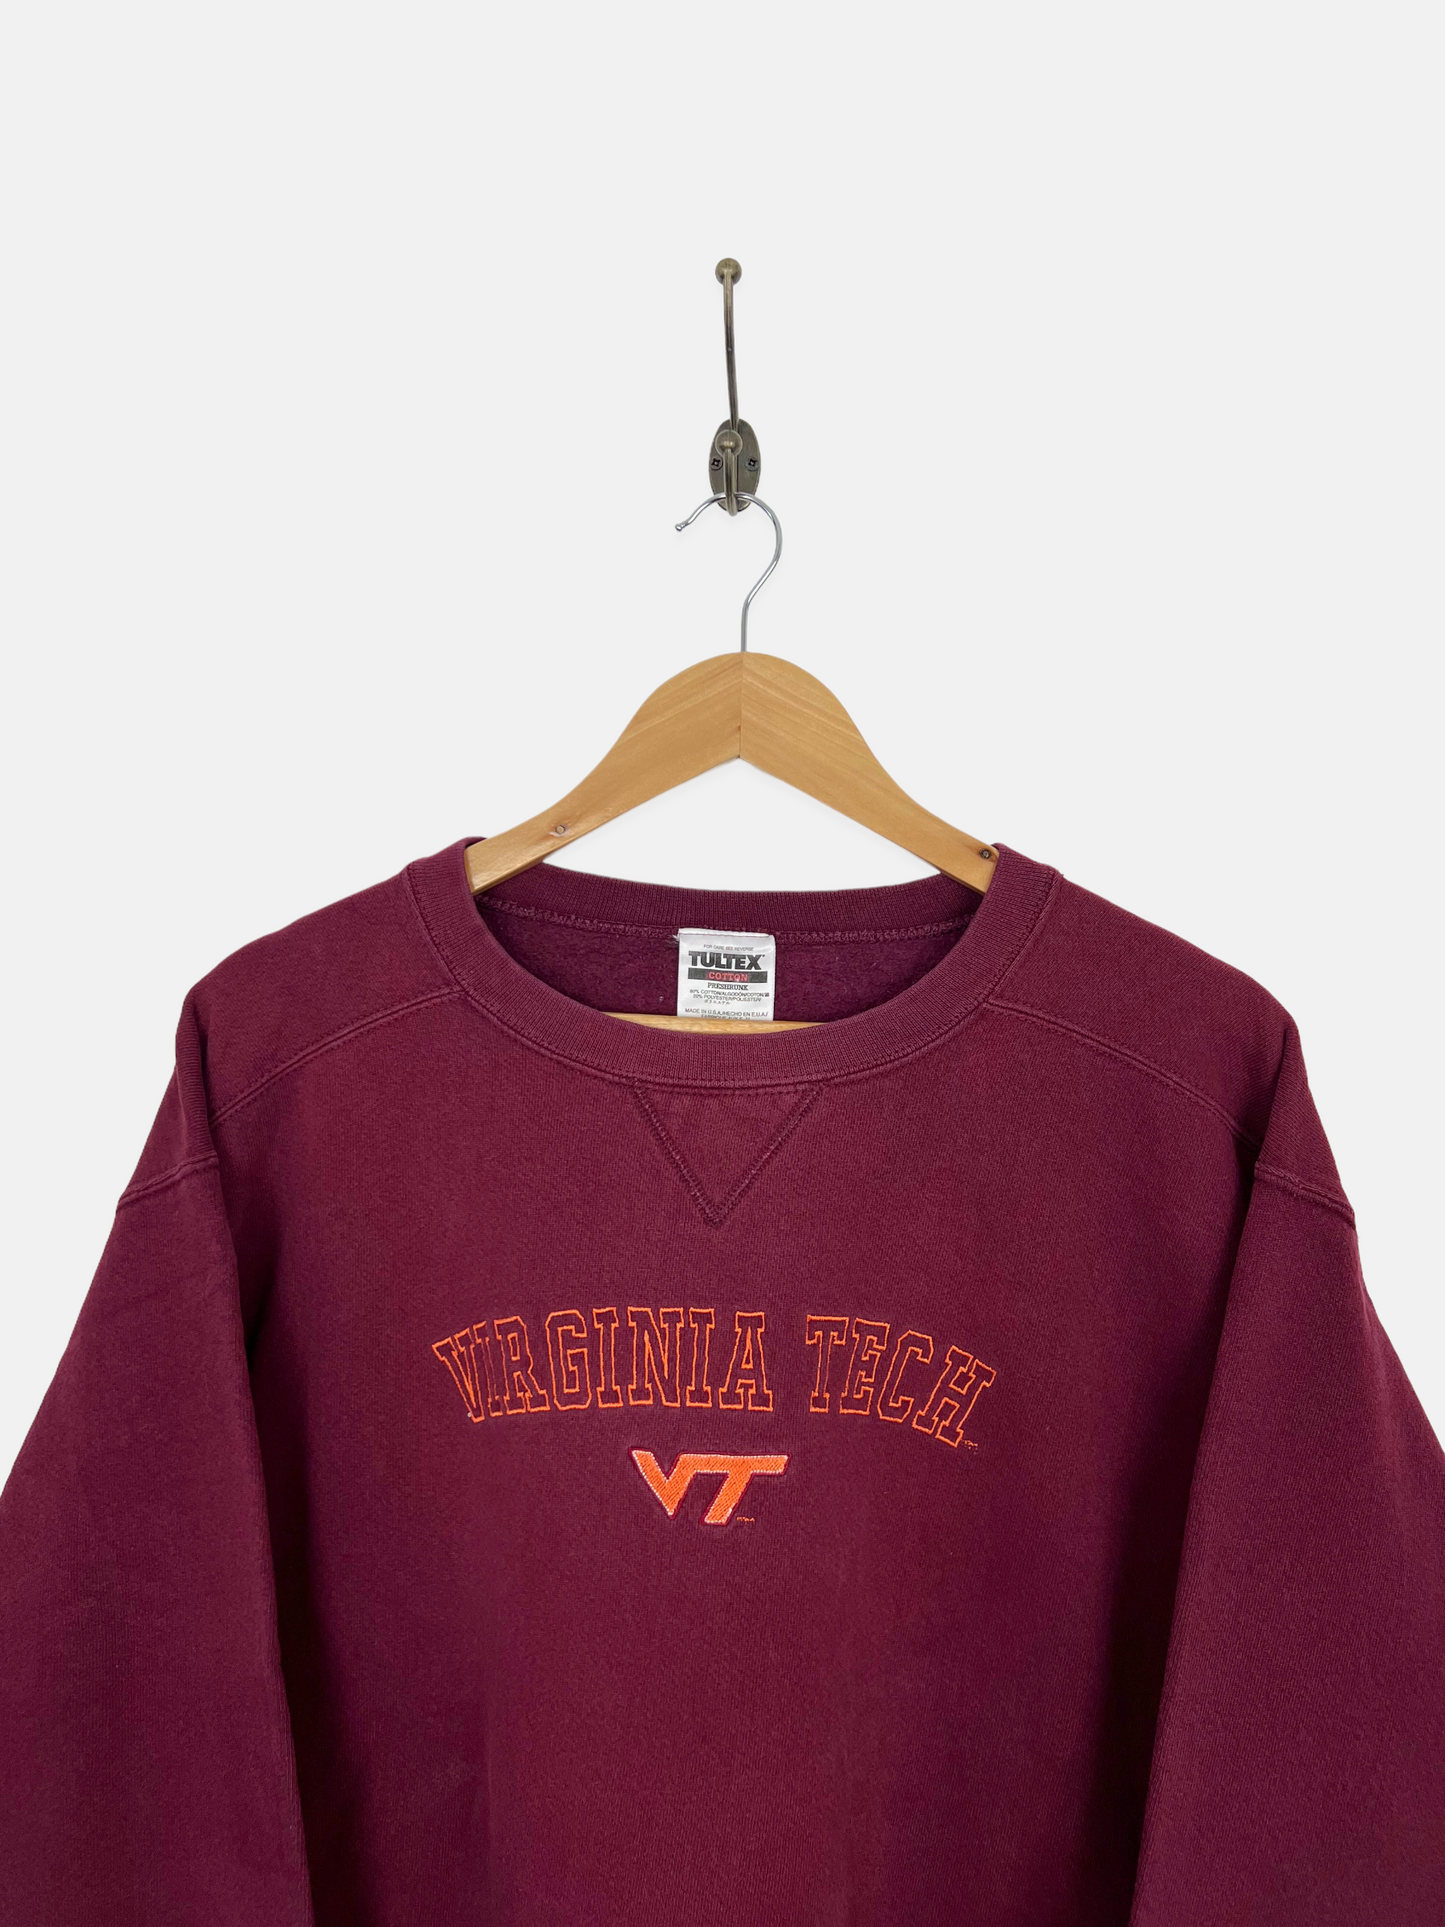 90's Virginia Tech USA Made Embroidered Vintage Sweatshirt M